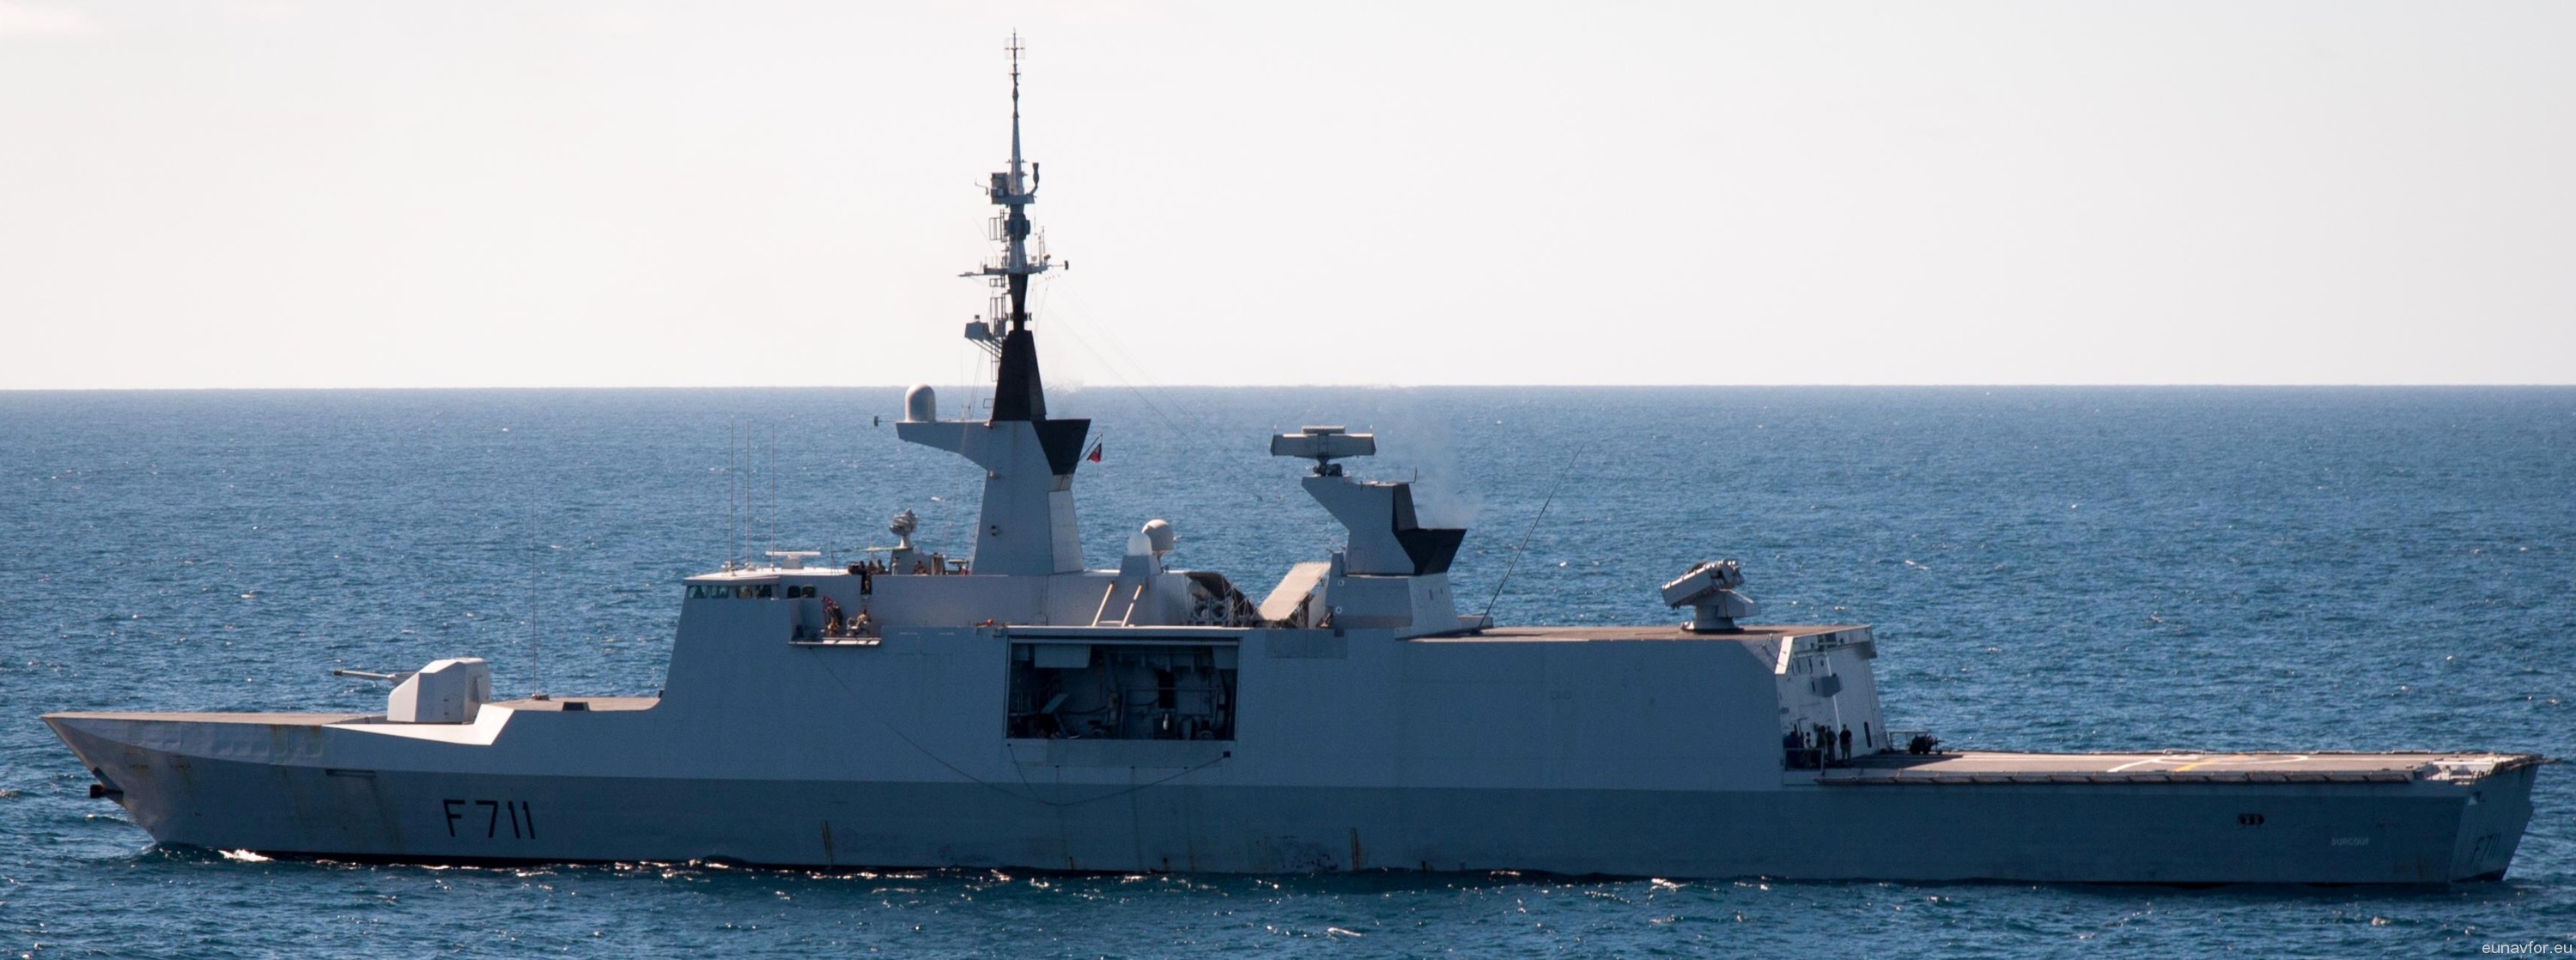 f-711 fs surcouf la fayette class frigate french navy marine nationale 09